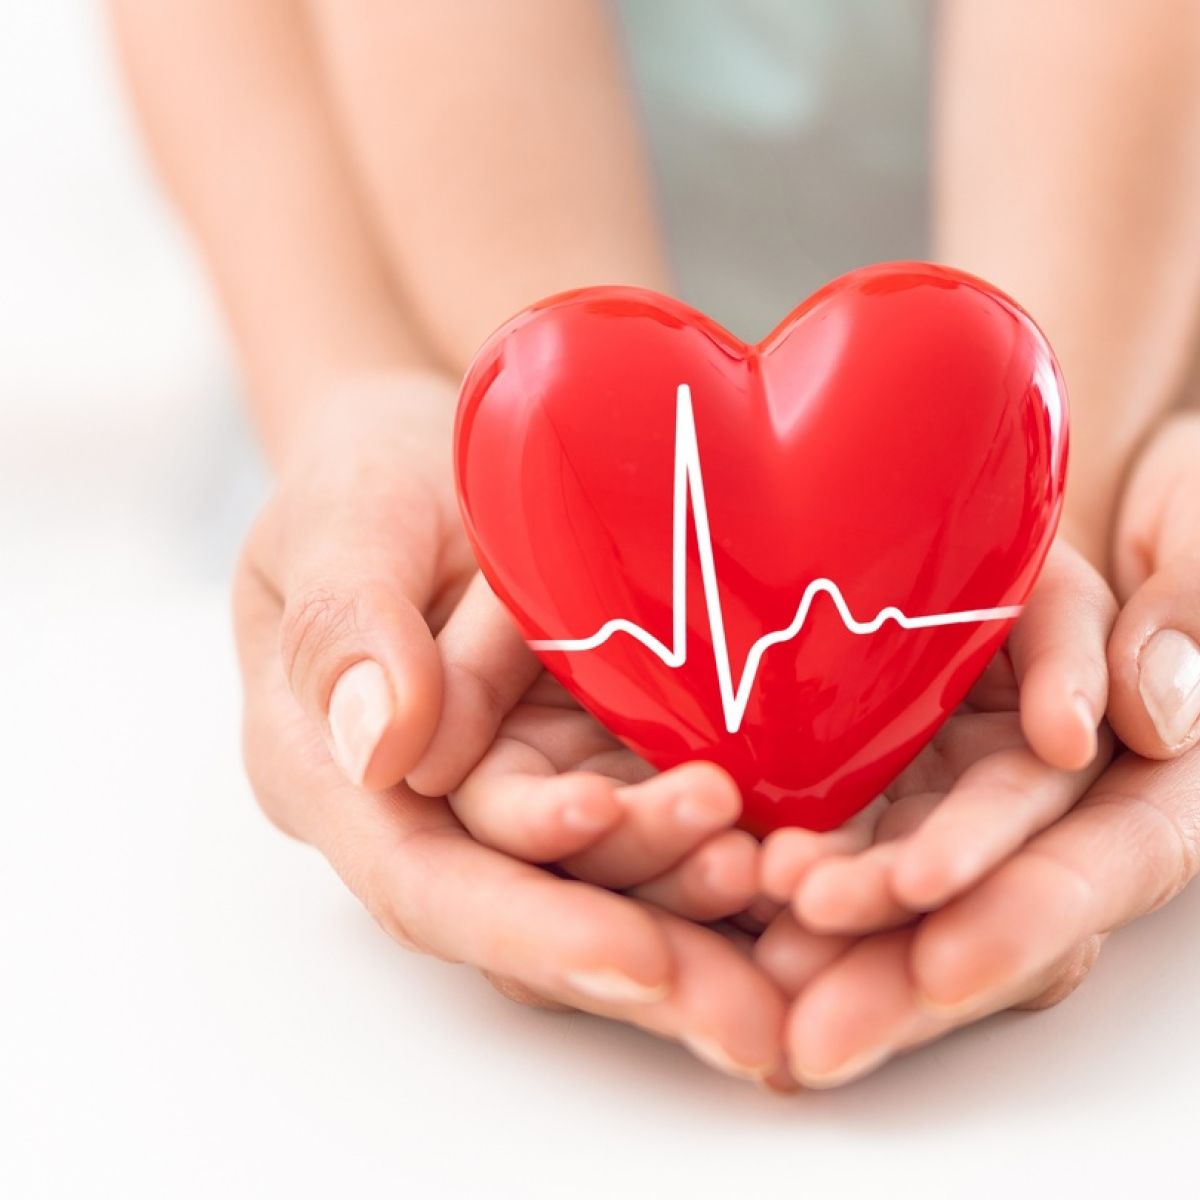 Seven Keys to Heart Health